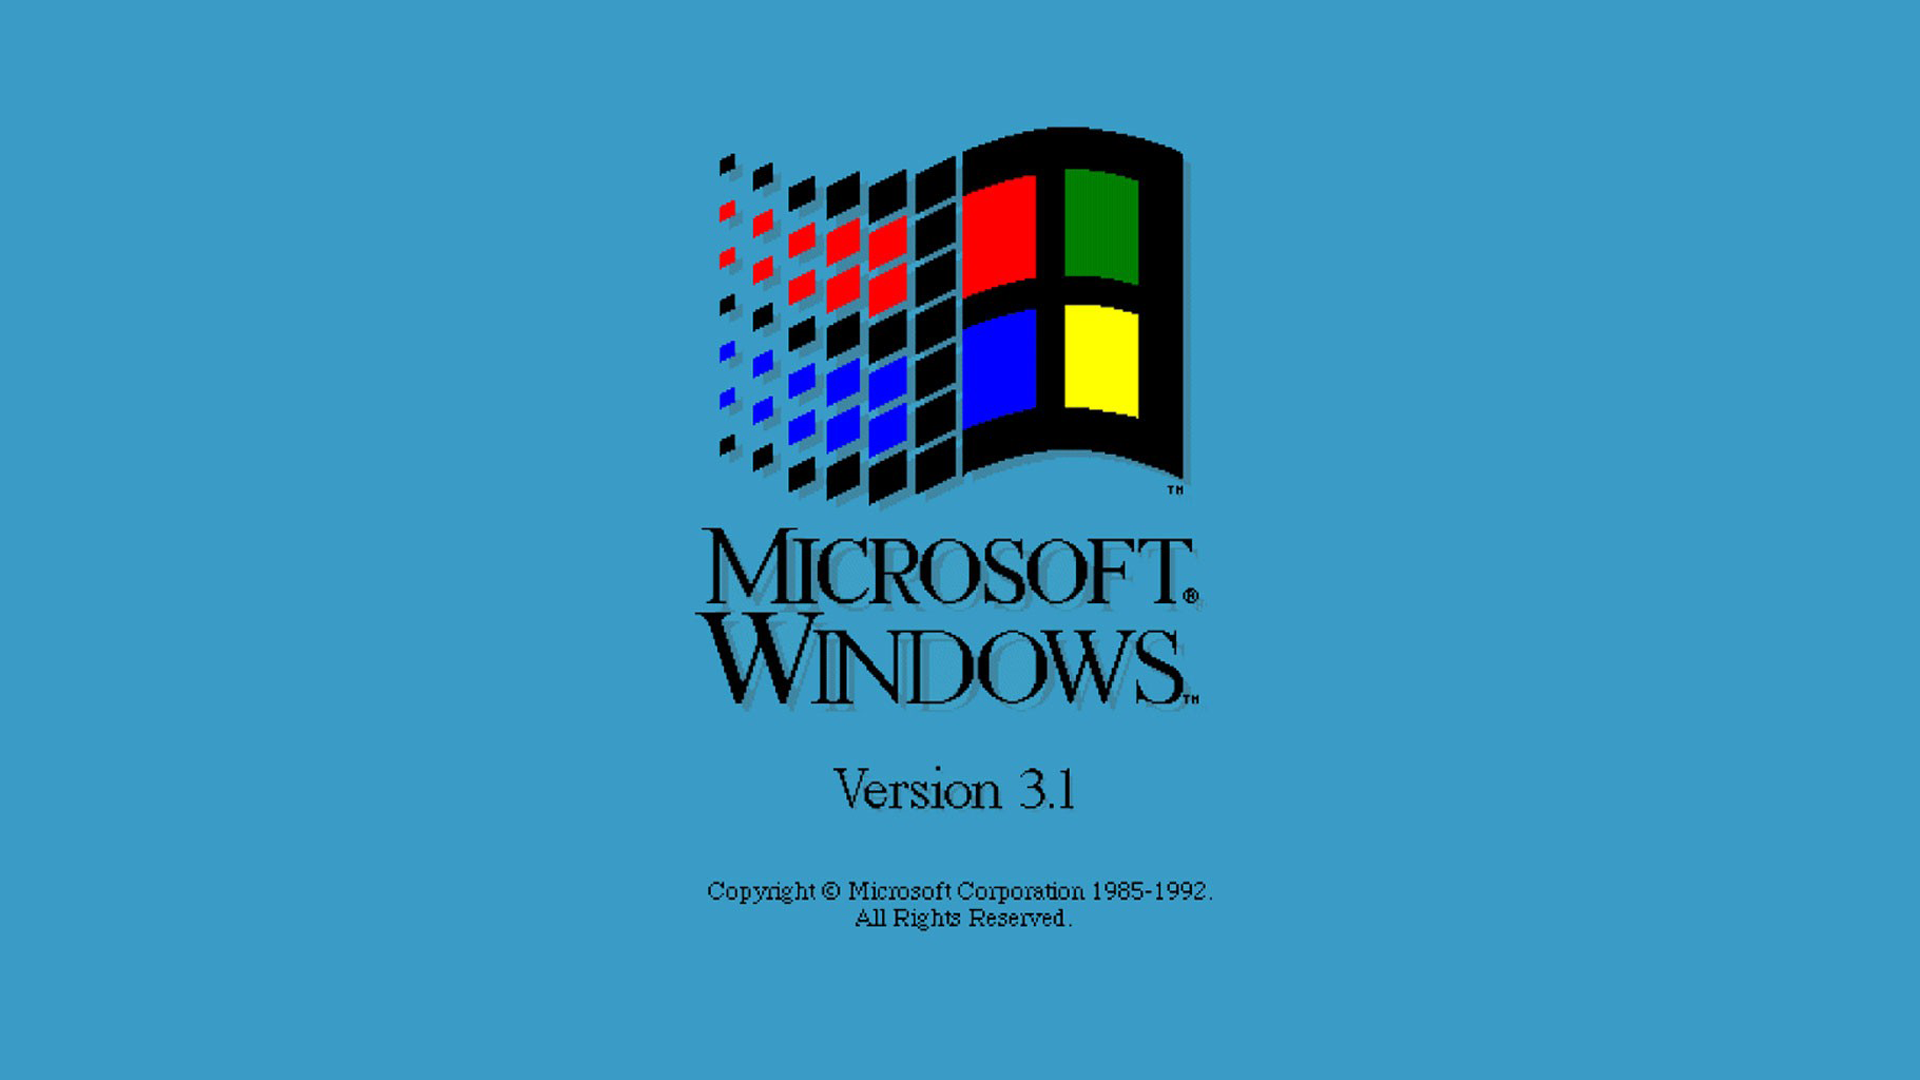 General 1920x1080 1990s computer nostalgia Microsoft Windows operating system